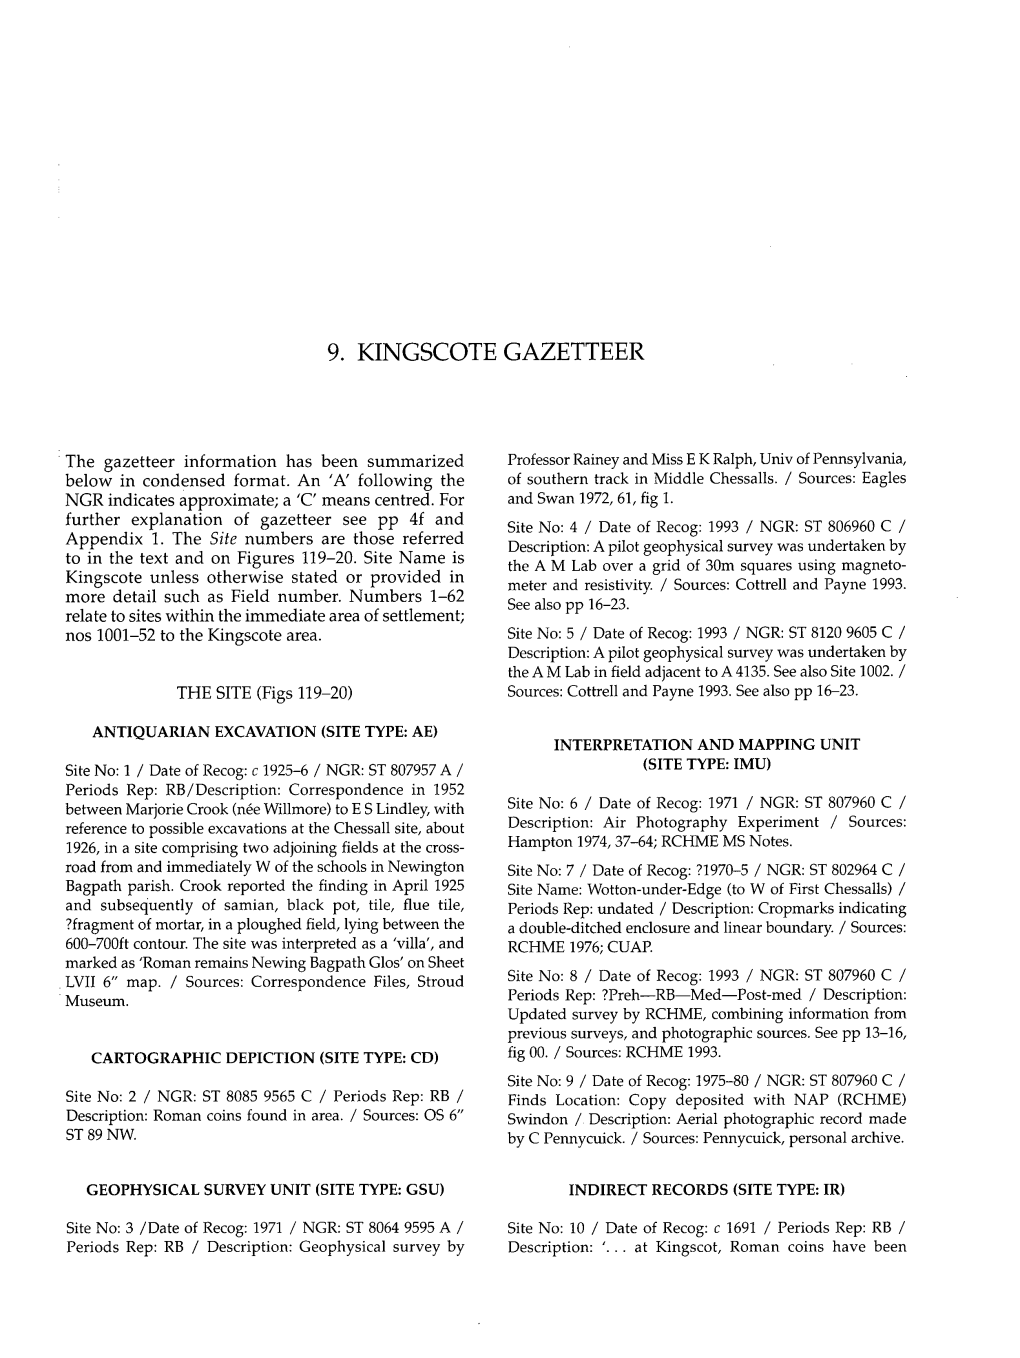 9. Kingscote Gazetteer